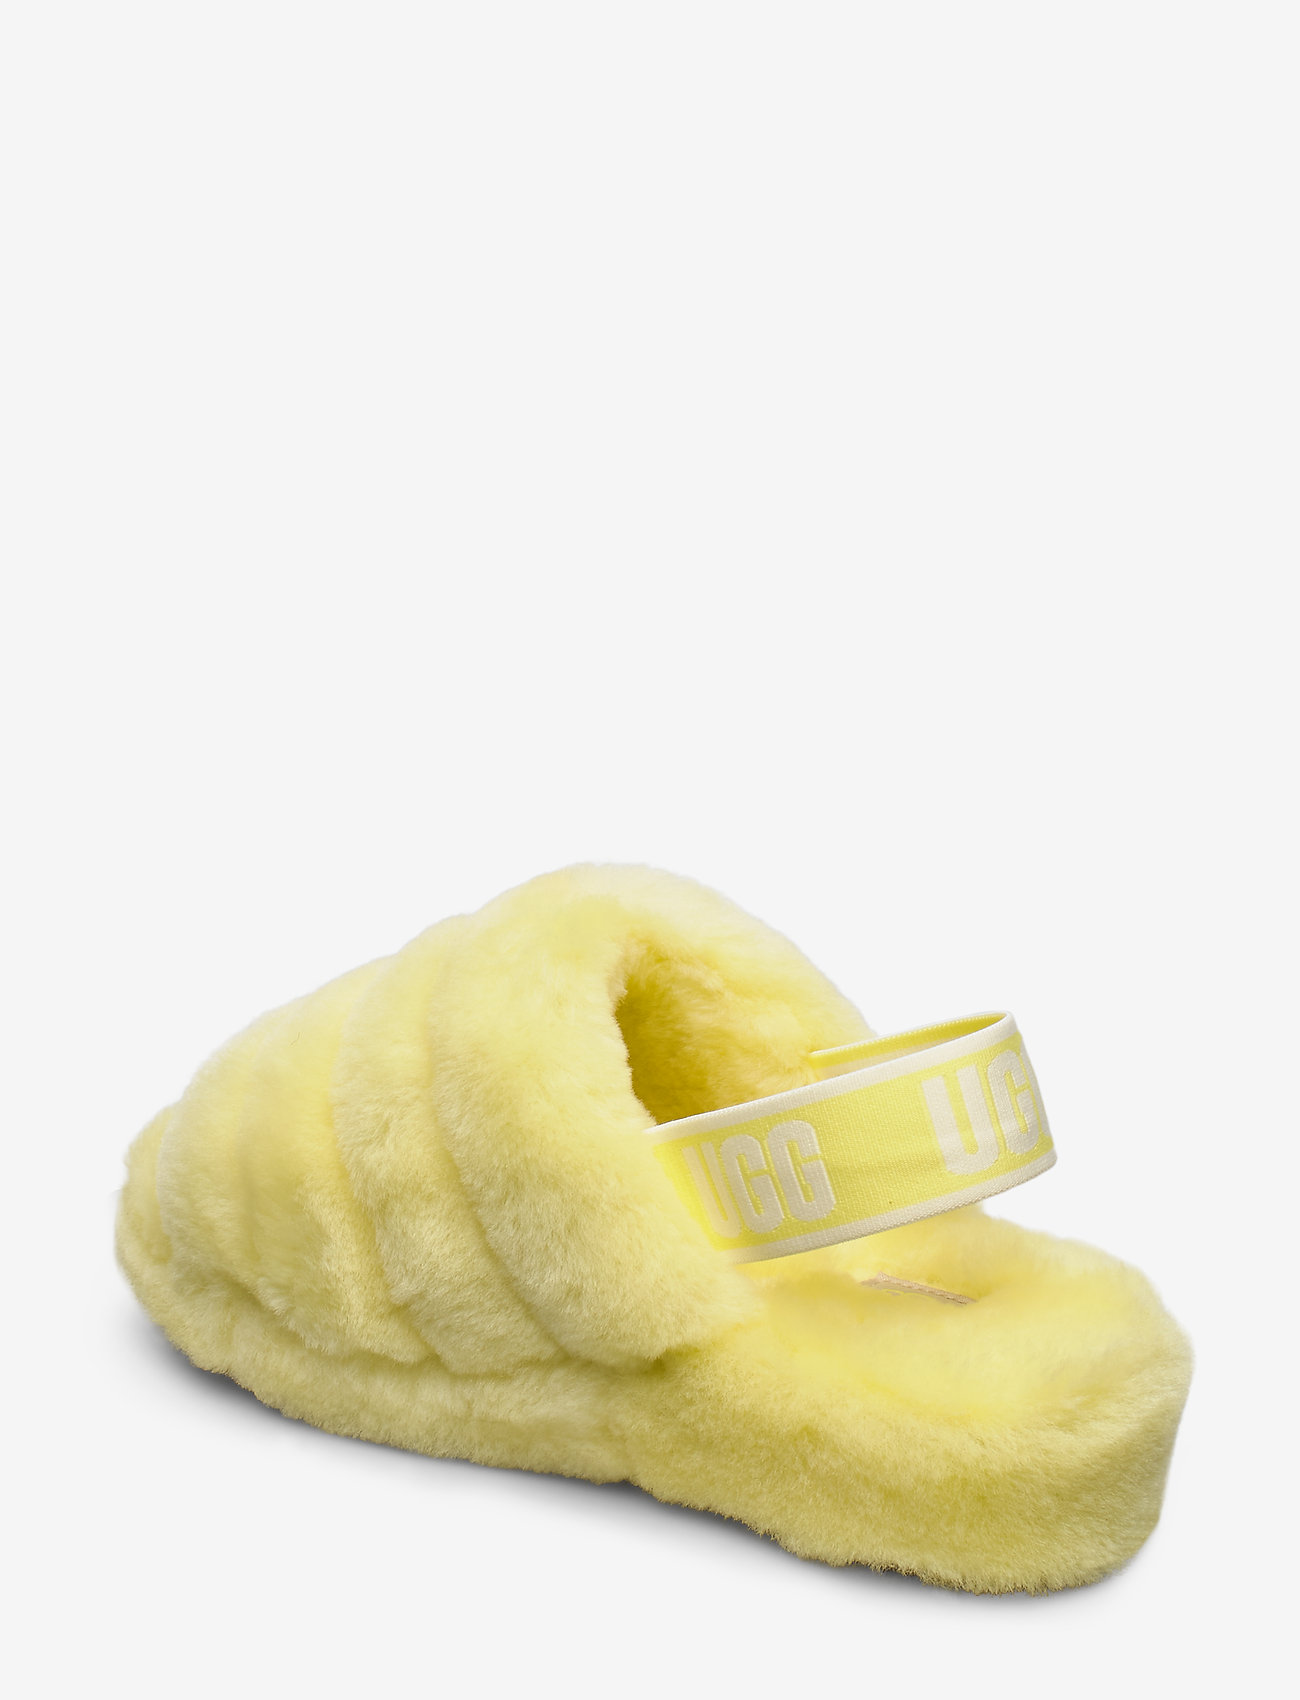 ugg sandals yellow